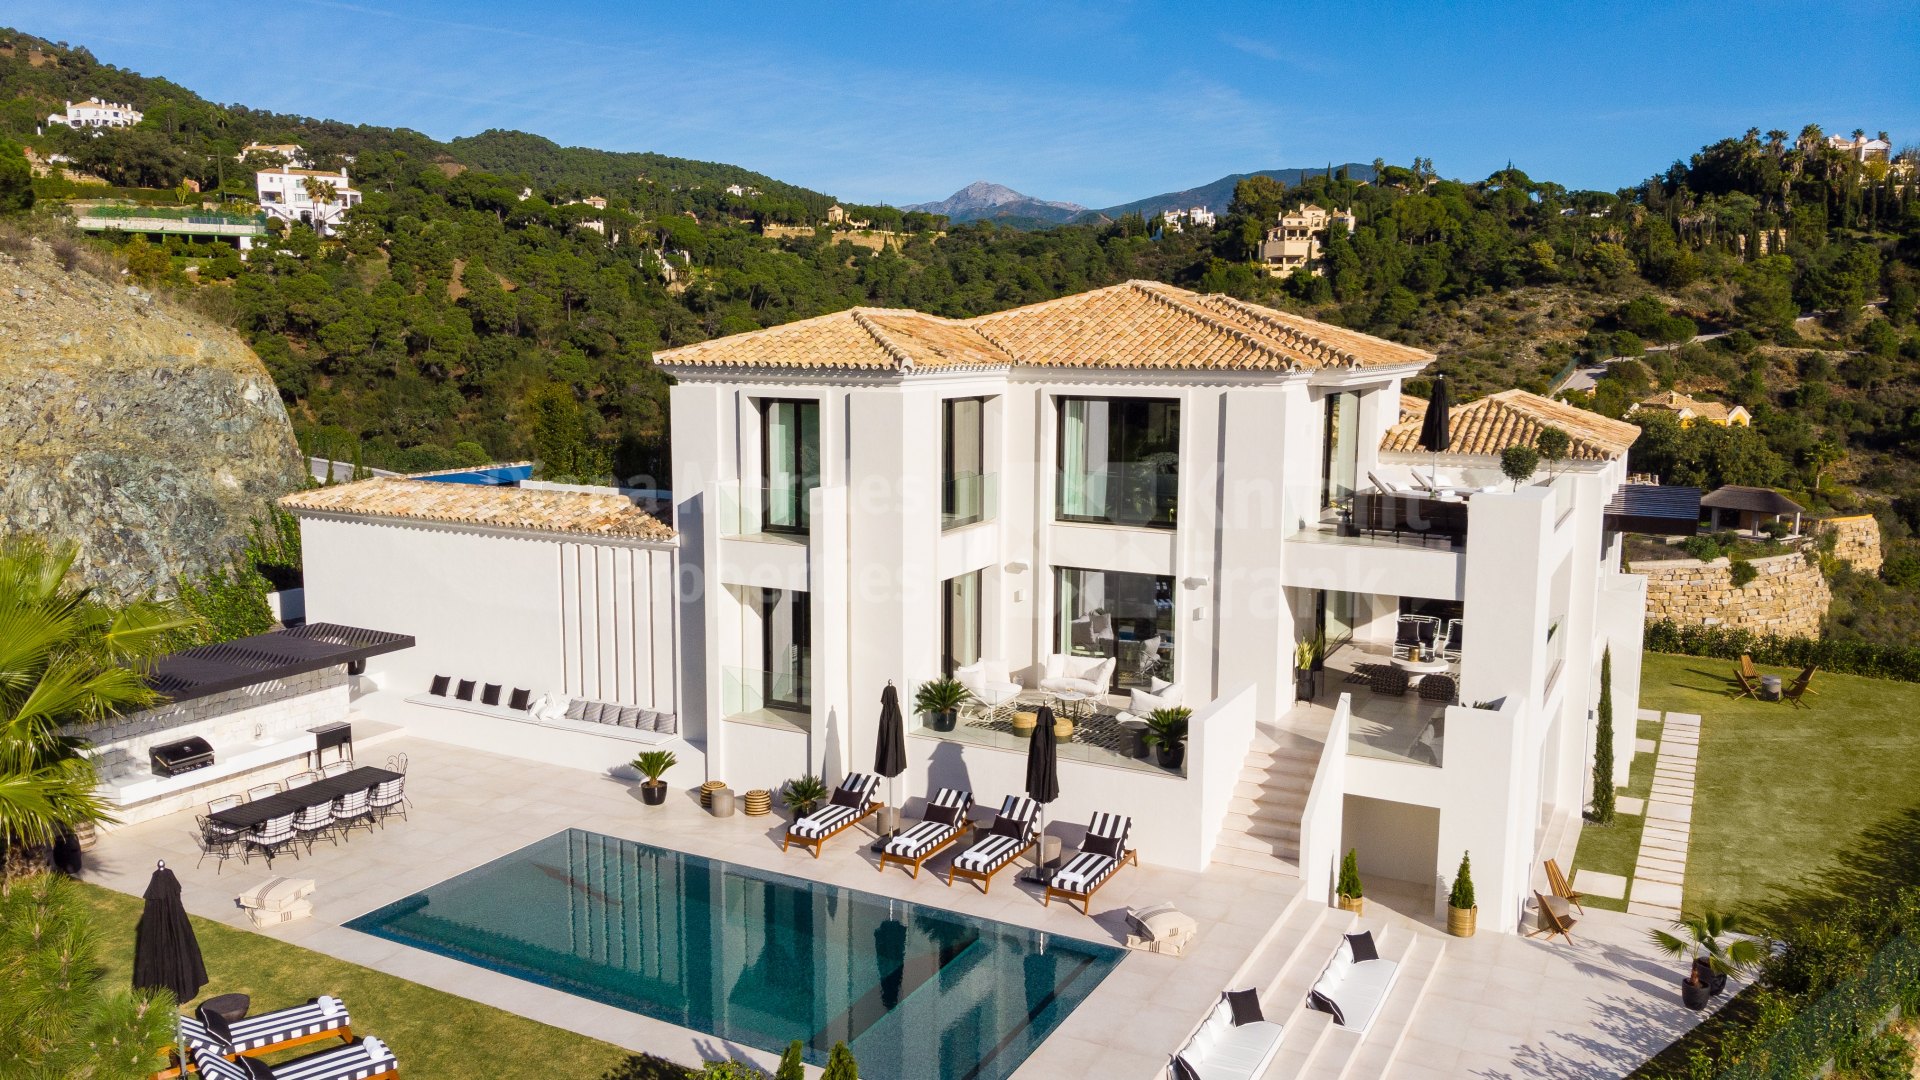 El Madroñal, Oak Valley, villa im modernen Stil mit Meerblick